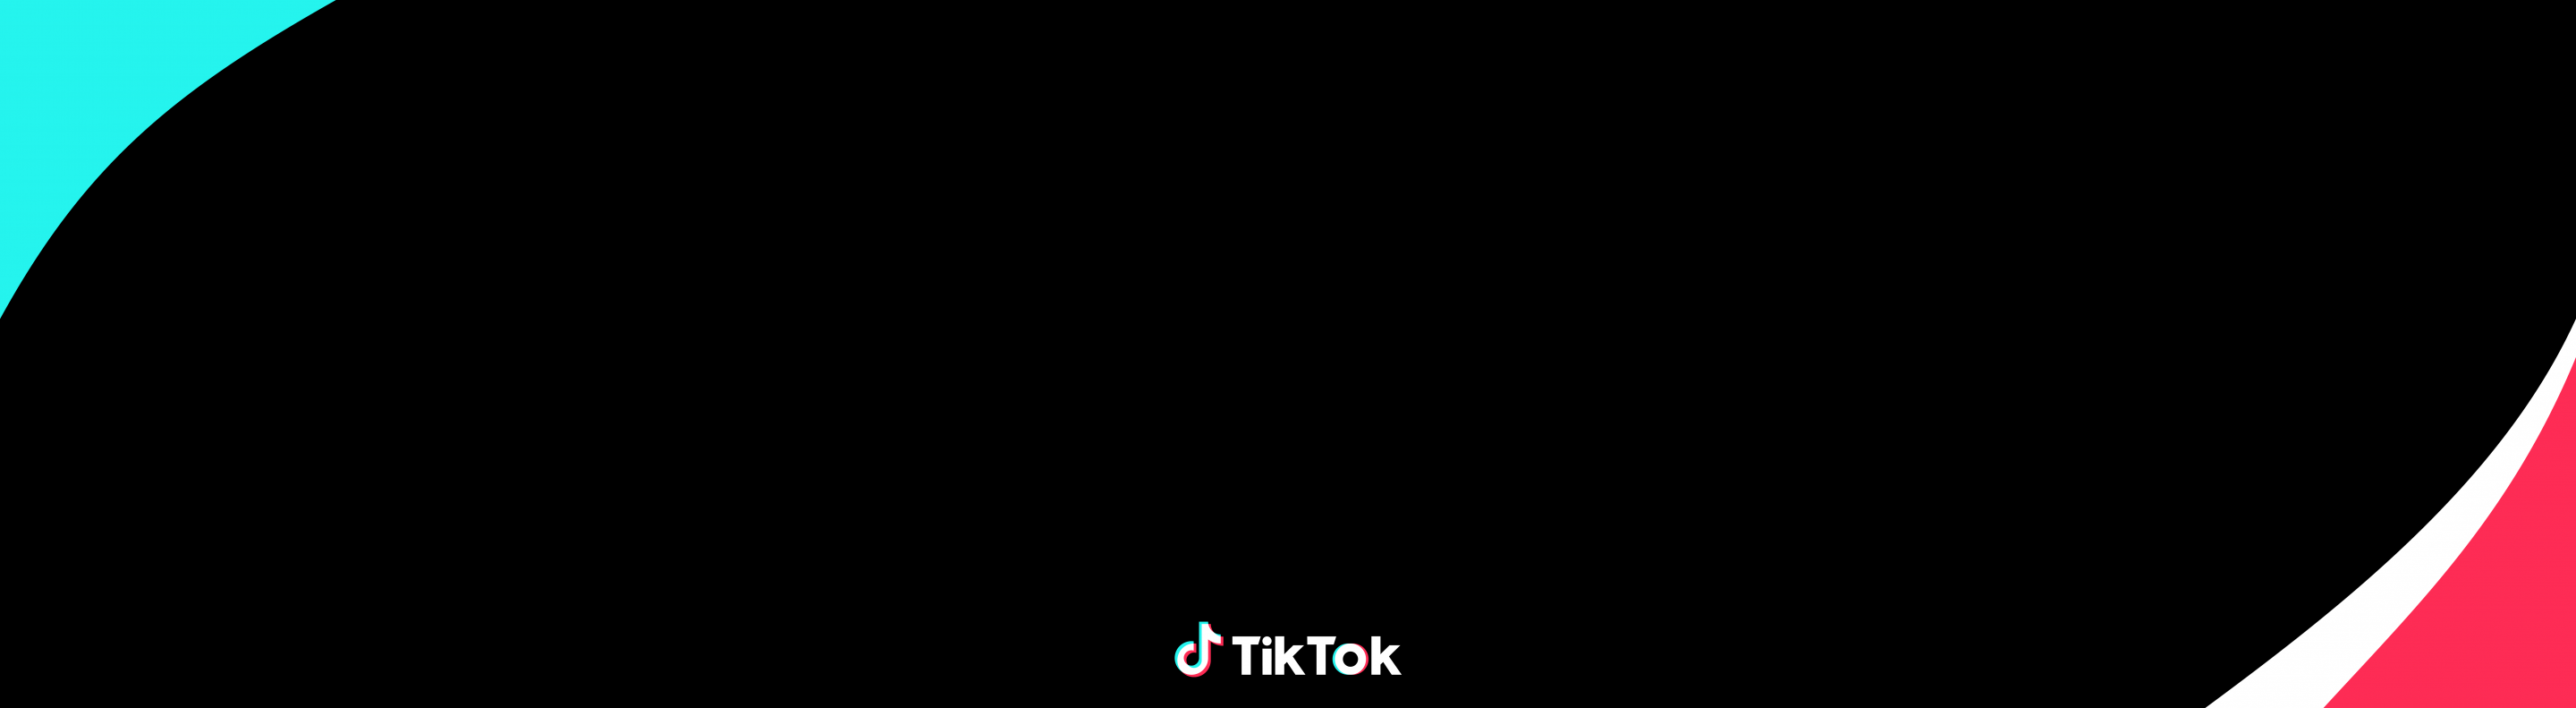 Who created the Renegade Dance on TikTok? The new TikTok challenge going  viral - PopBuzz